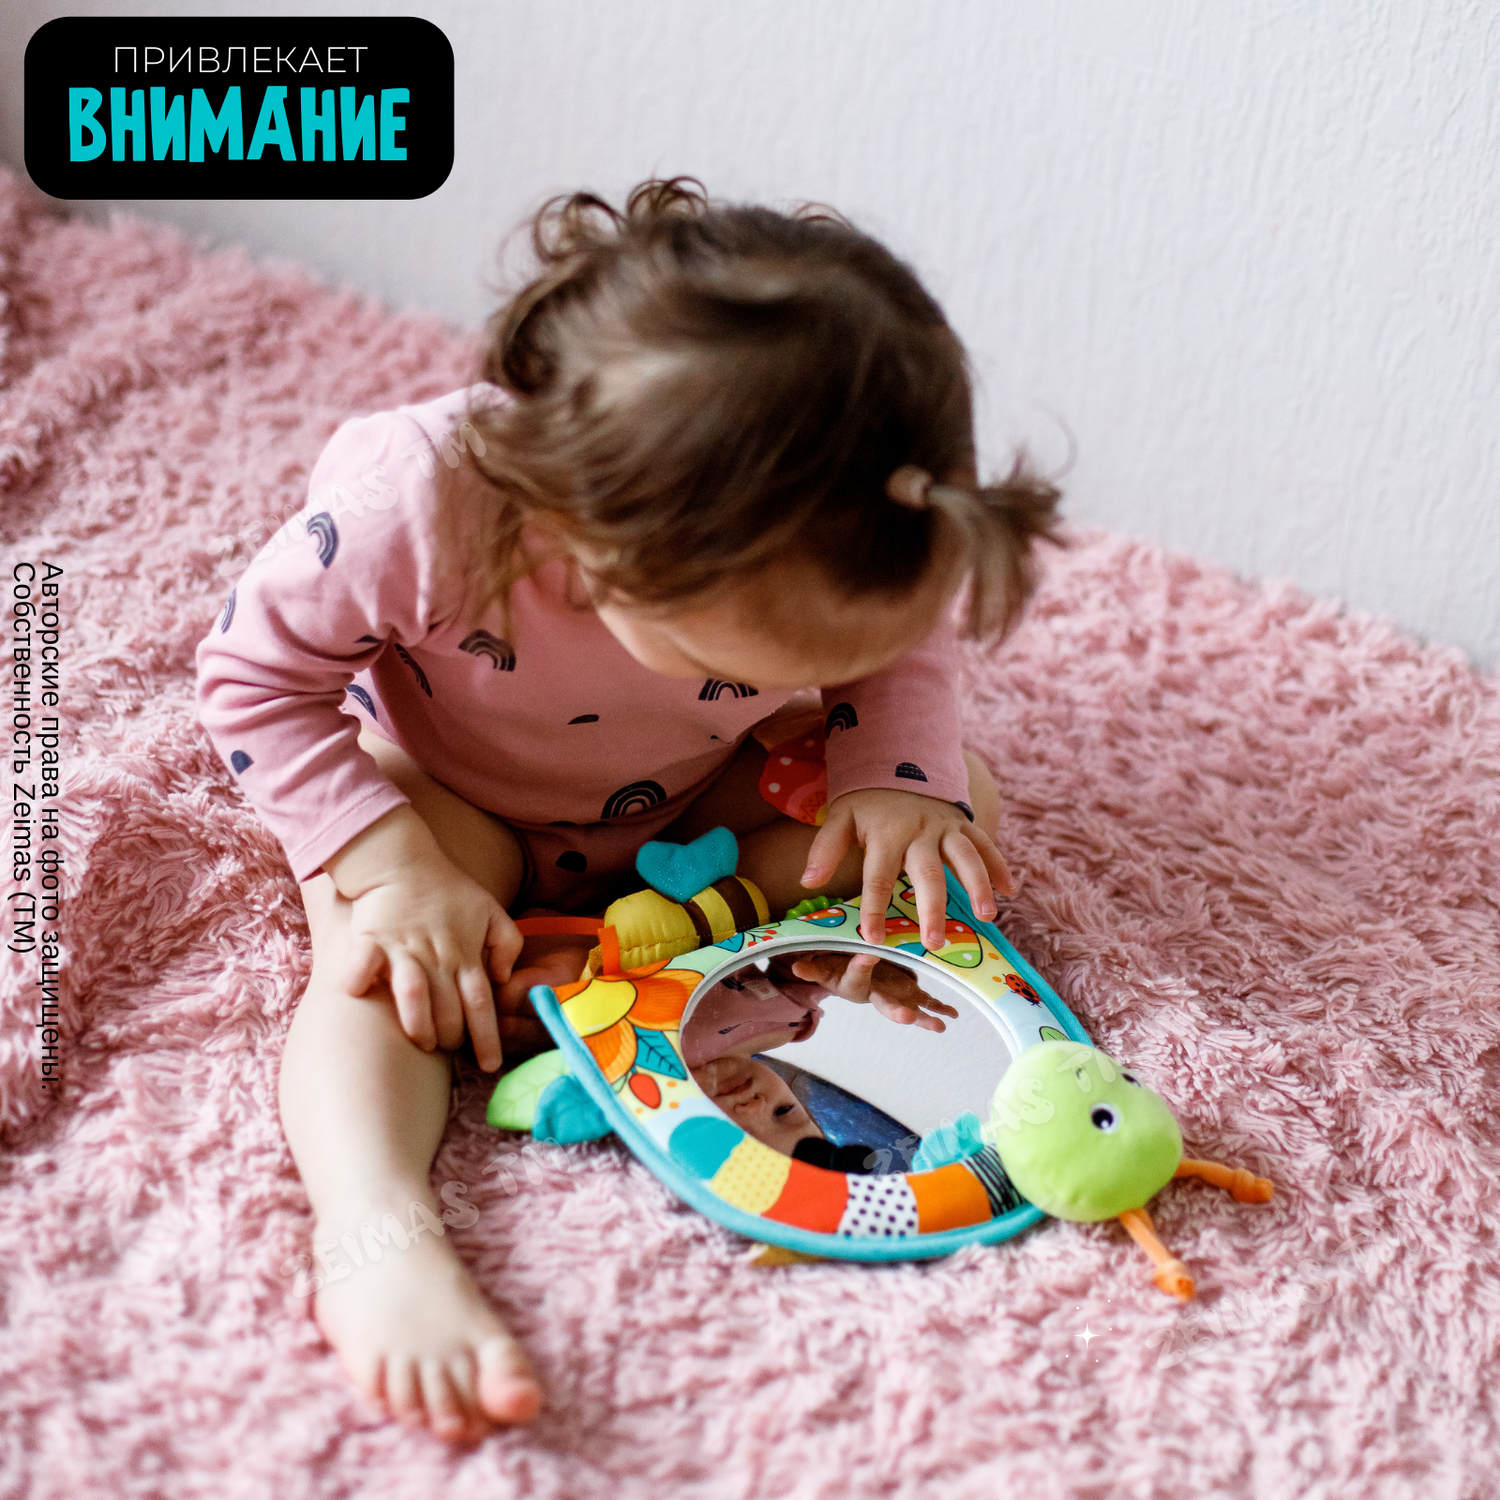 Игрушка-подвеска развивающая Zeimas Гусеница с зеркалом погремушка - фото 2